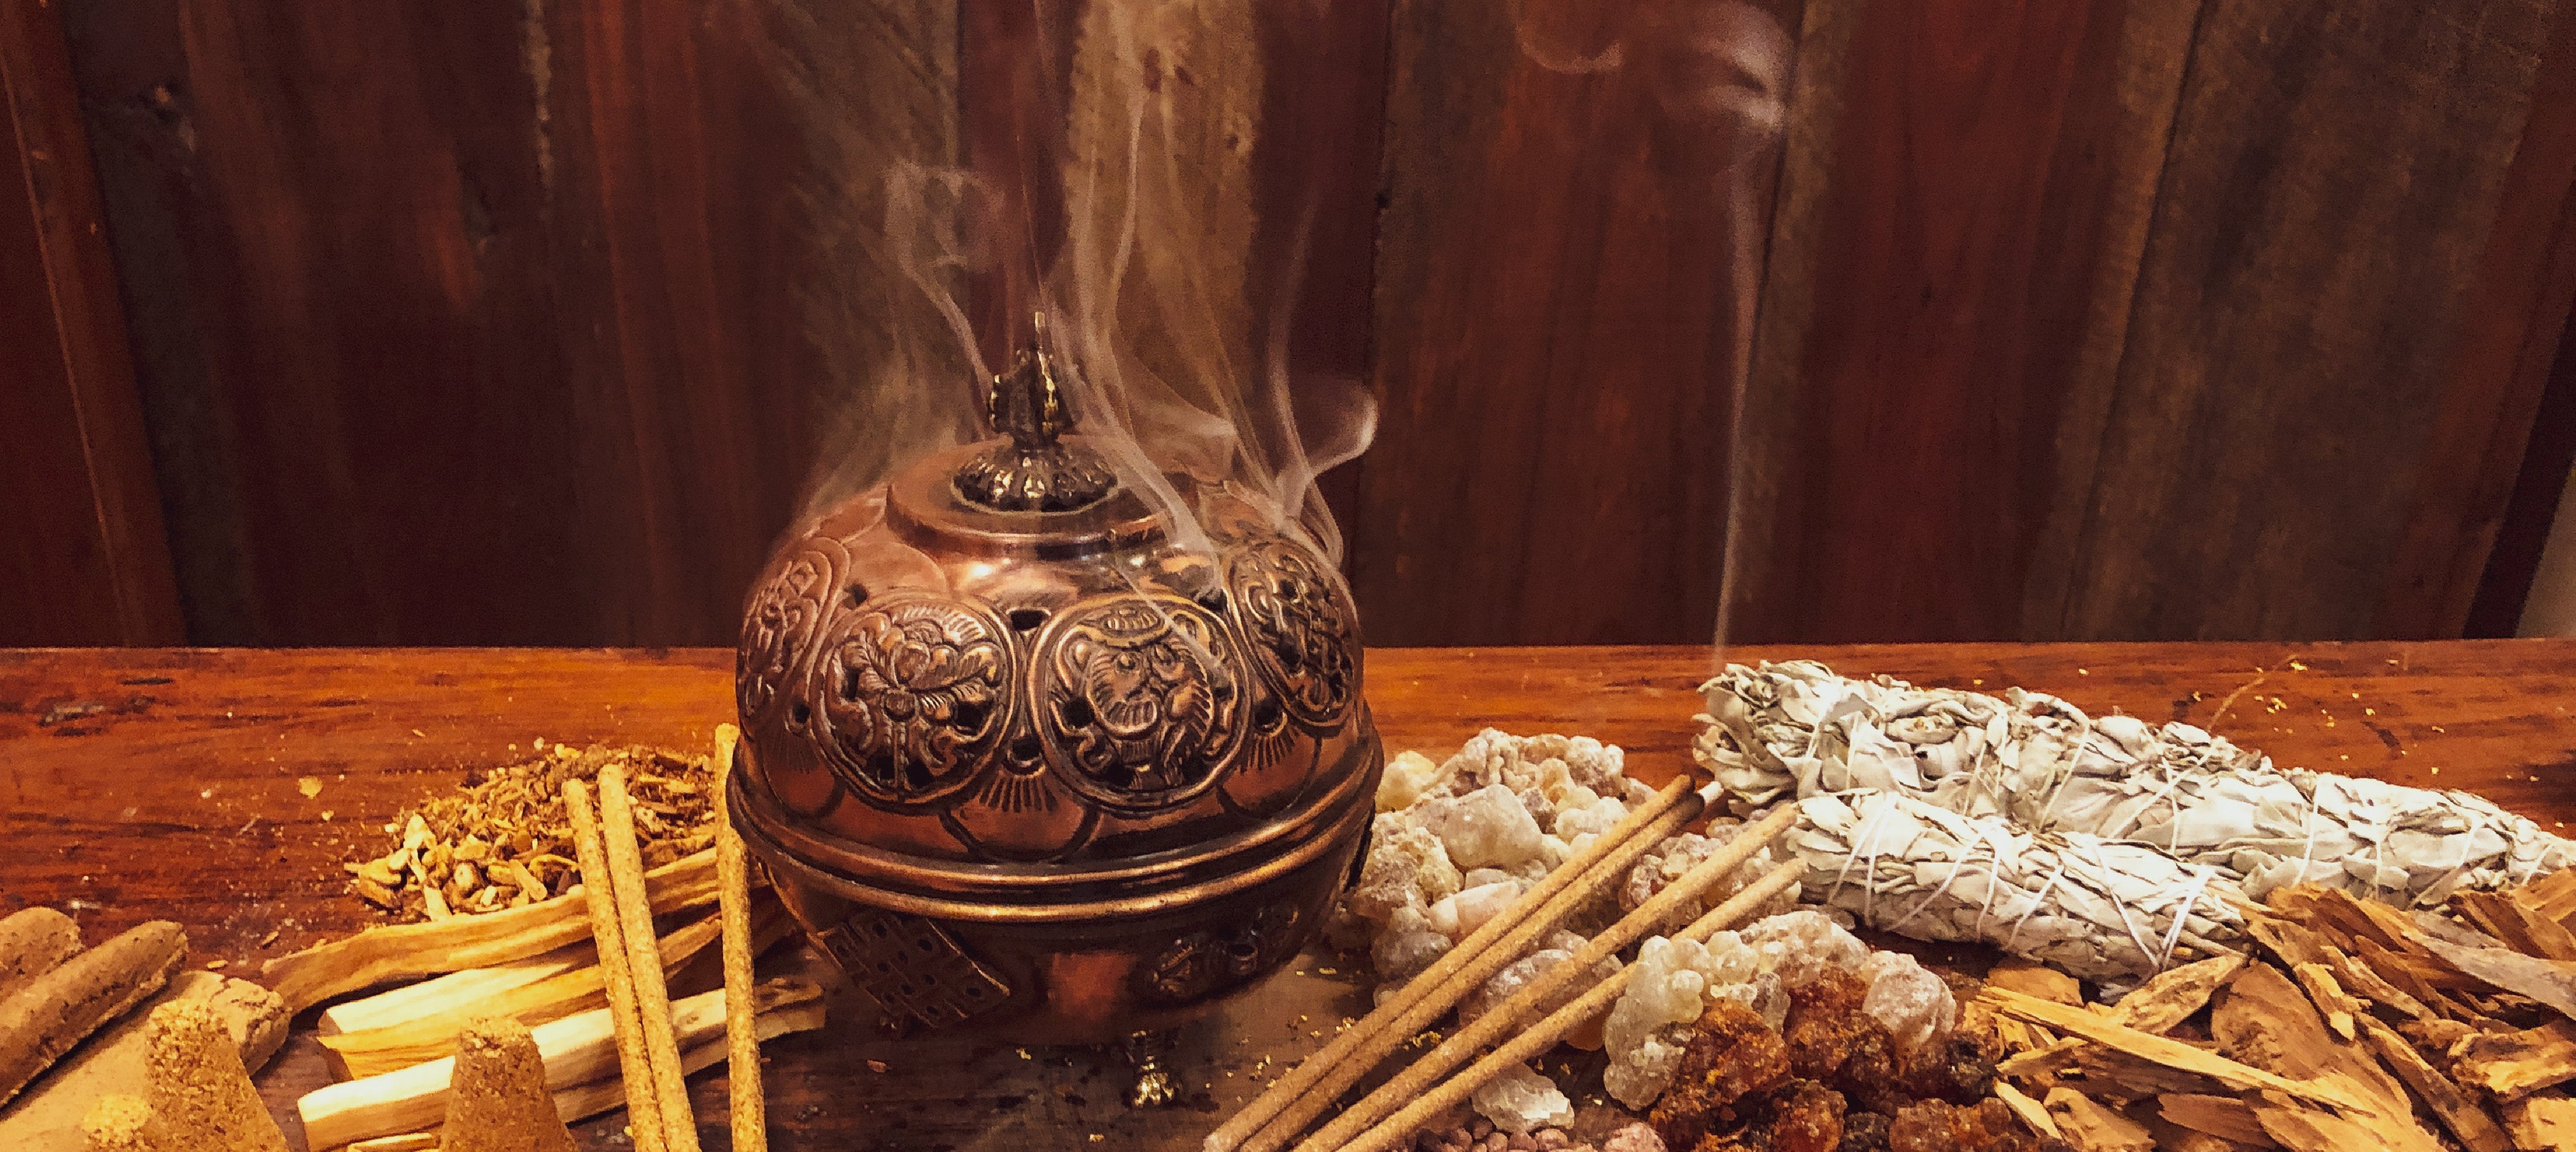 Aromatic Incense